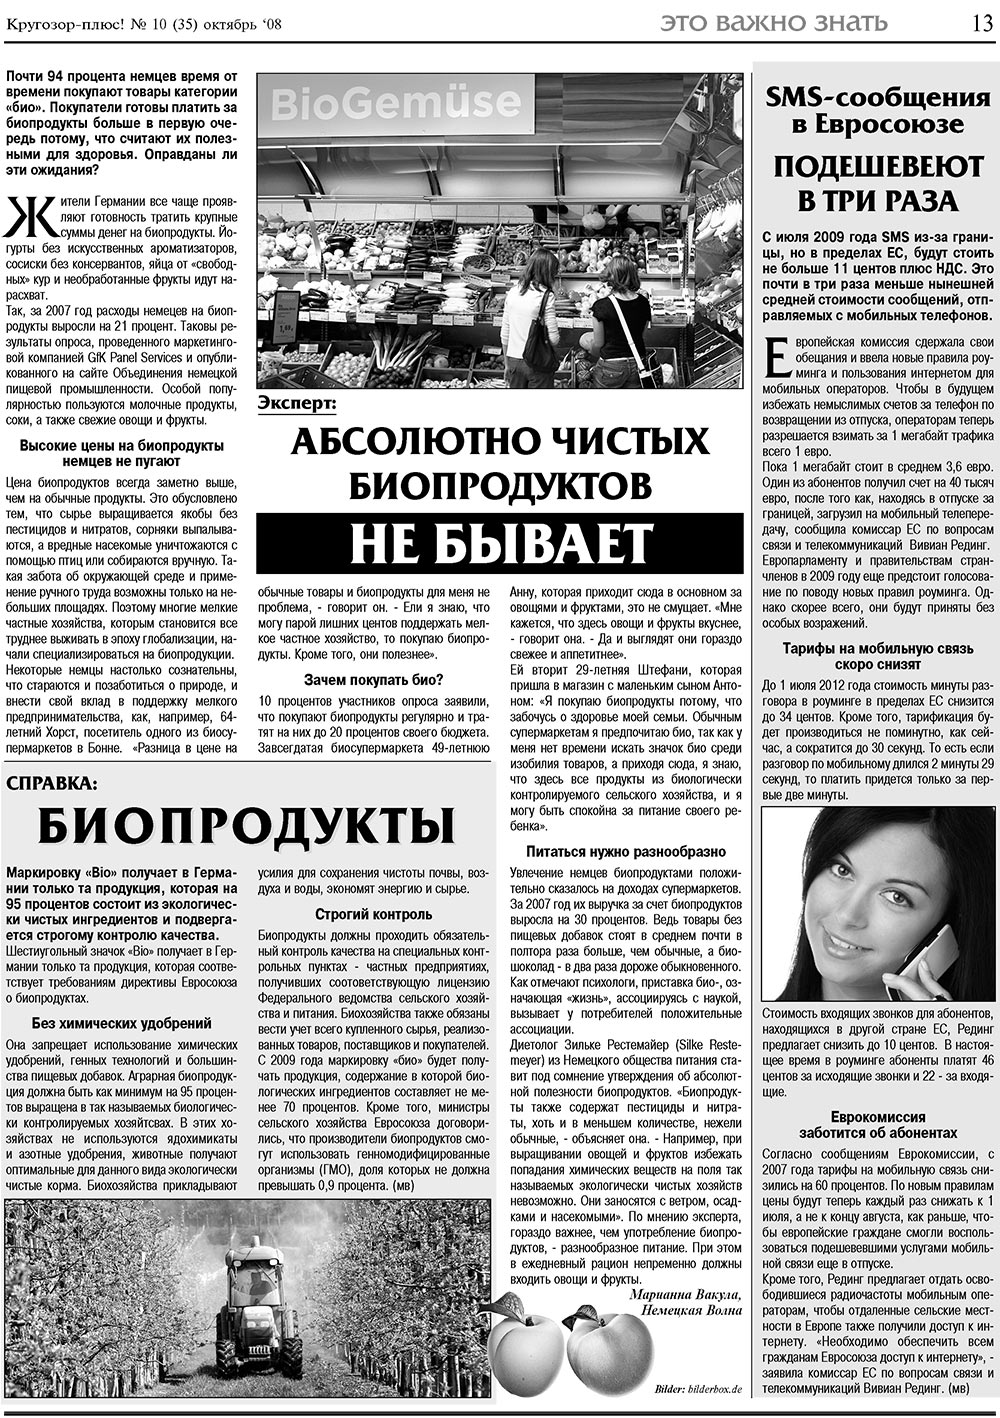 Кругозор плюс! (газета). 2008 год, номер 10, стр. 13